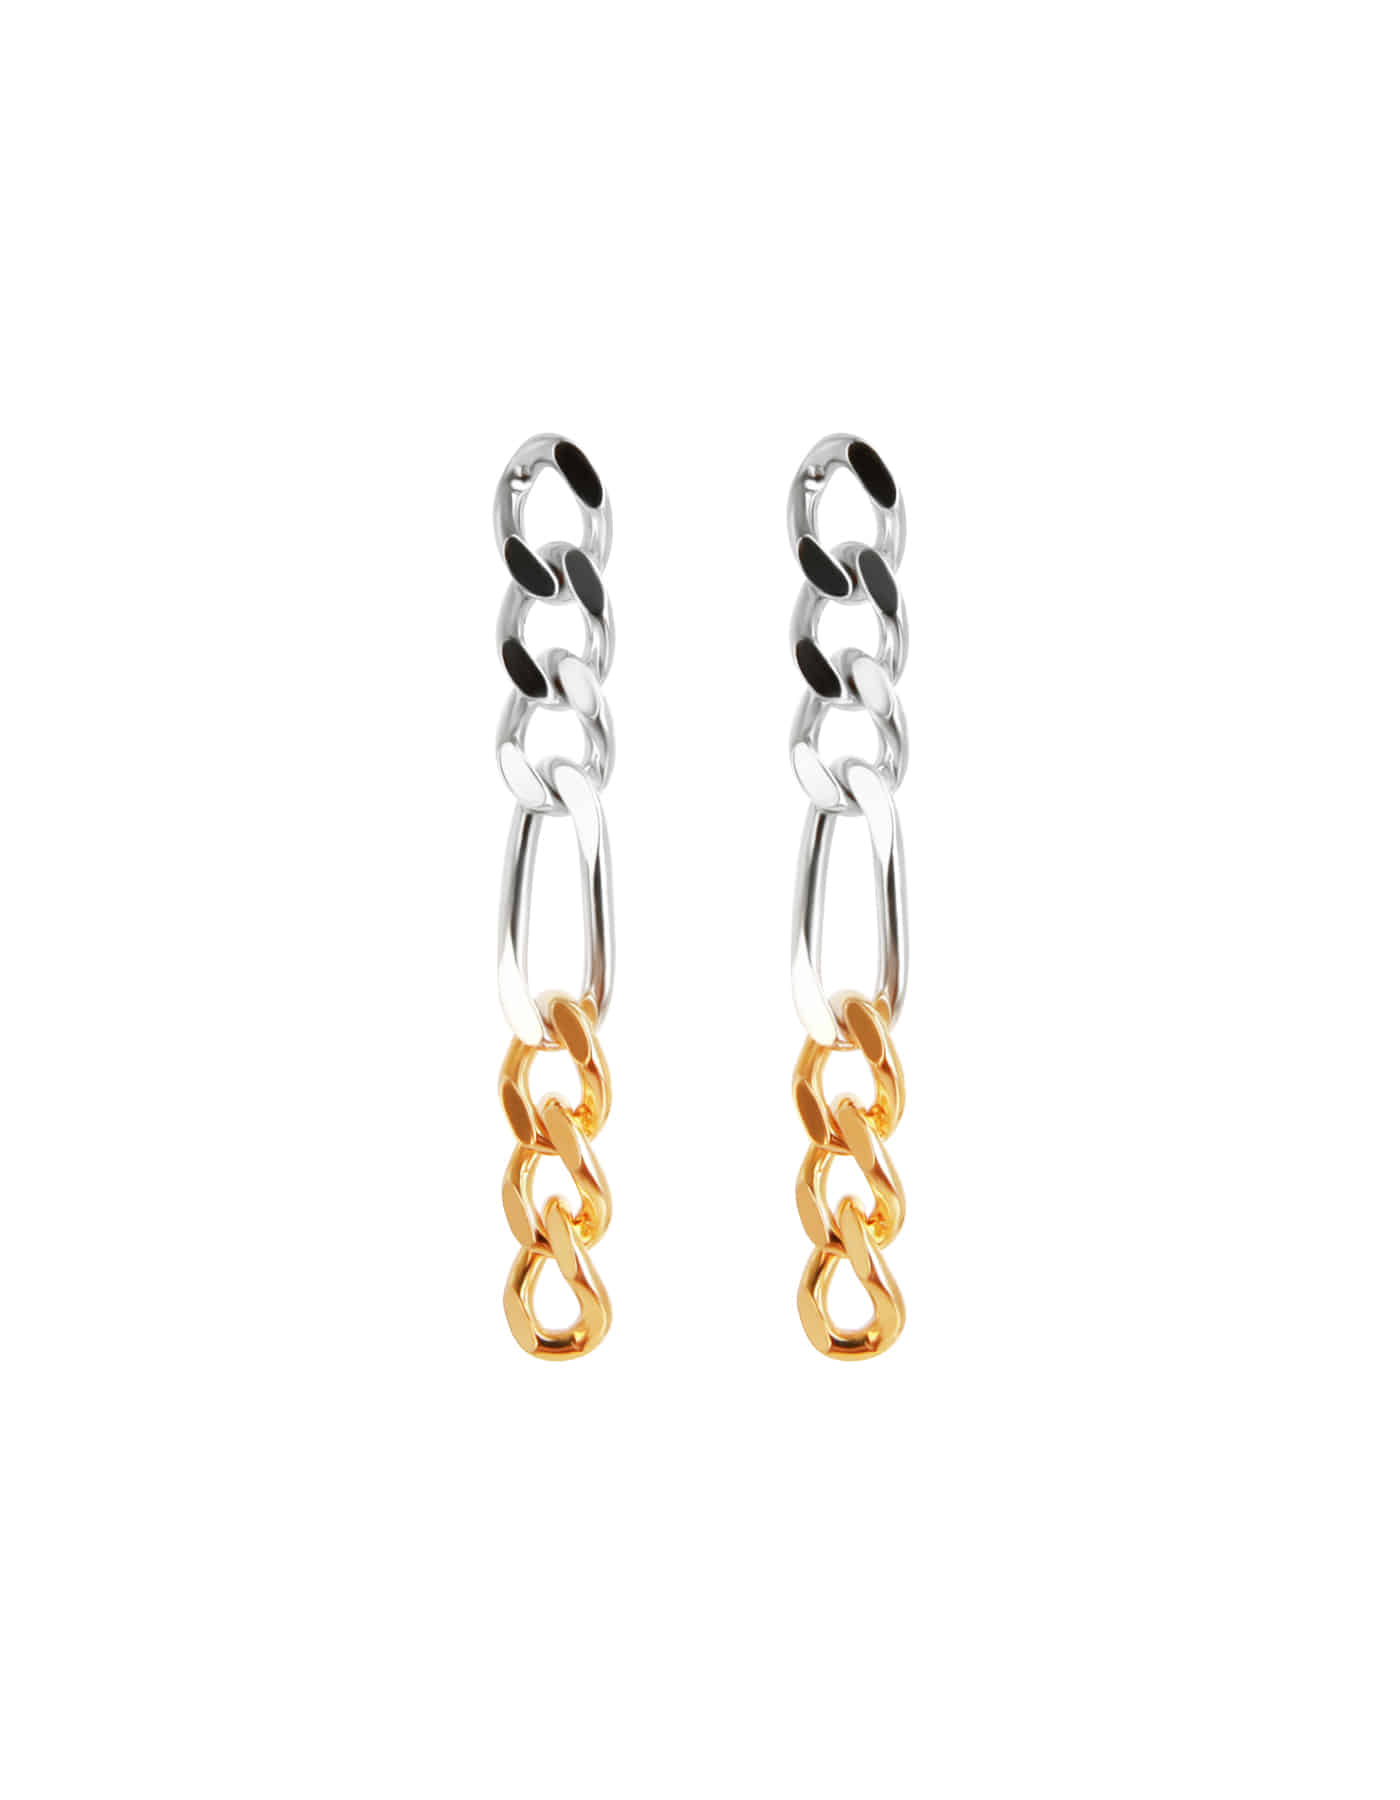 Two-Tone Figaro Chain Earrings